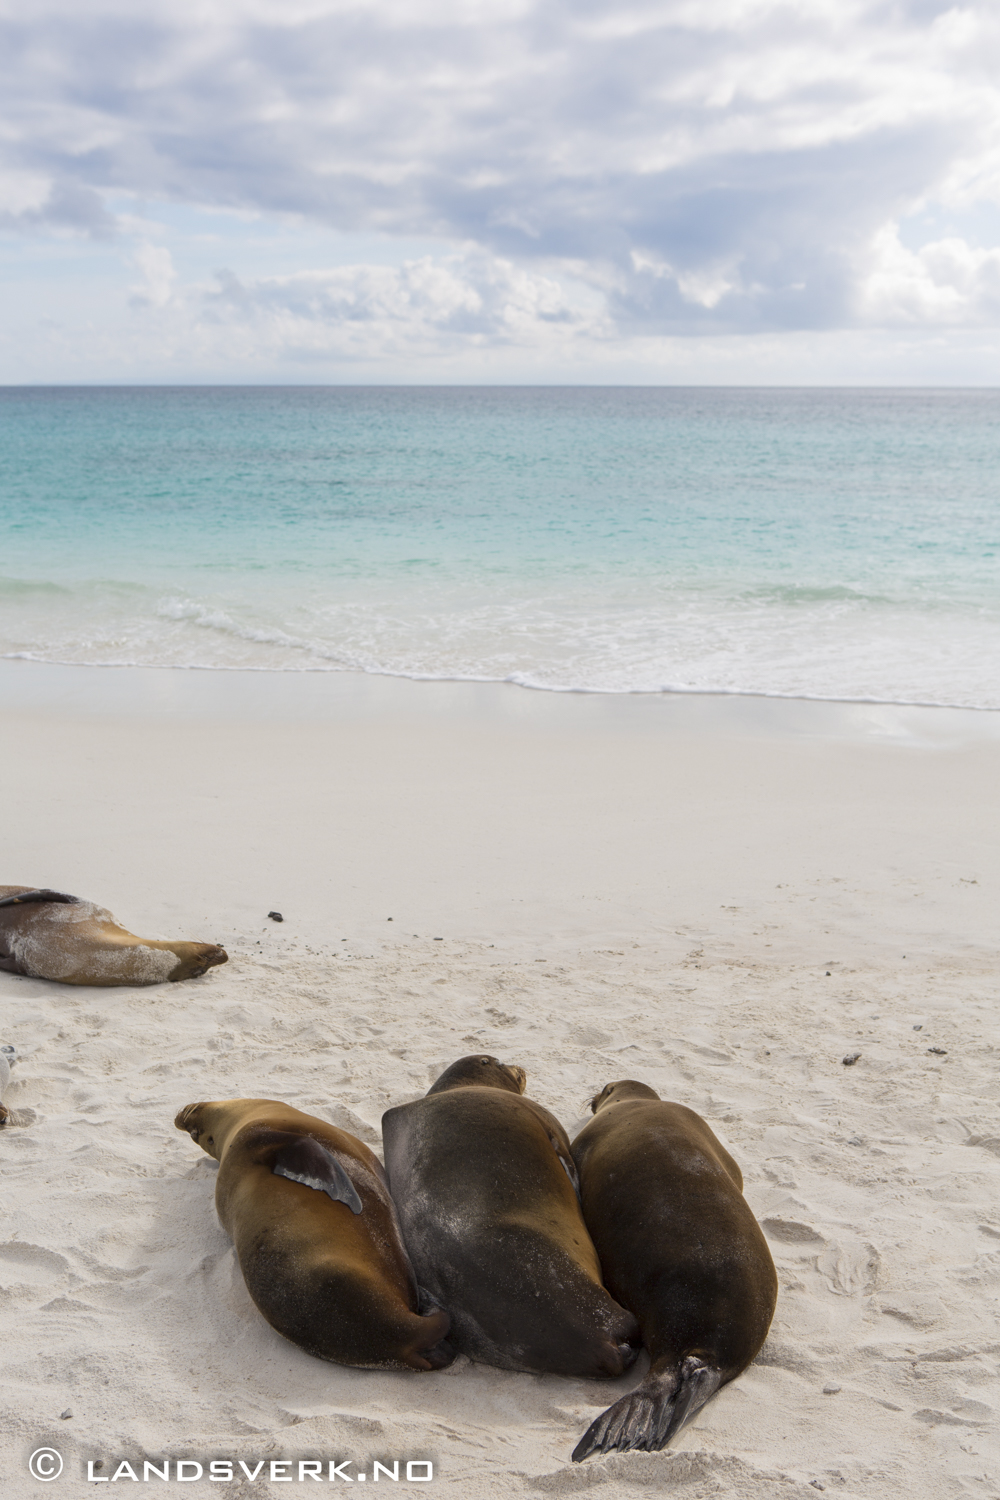 Wild Sea Lions, Gardner Bay, Isla Espanola, Galapagos. 

(Canon EOS 5D Mark III / Canon EF 24-70mm f/2.8 L USM)